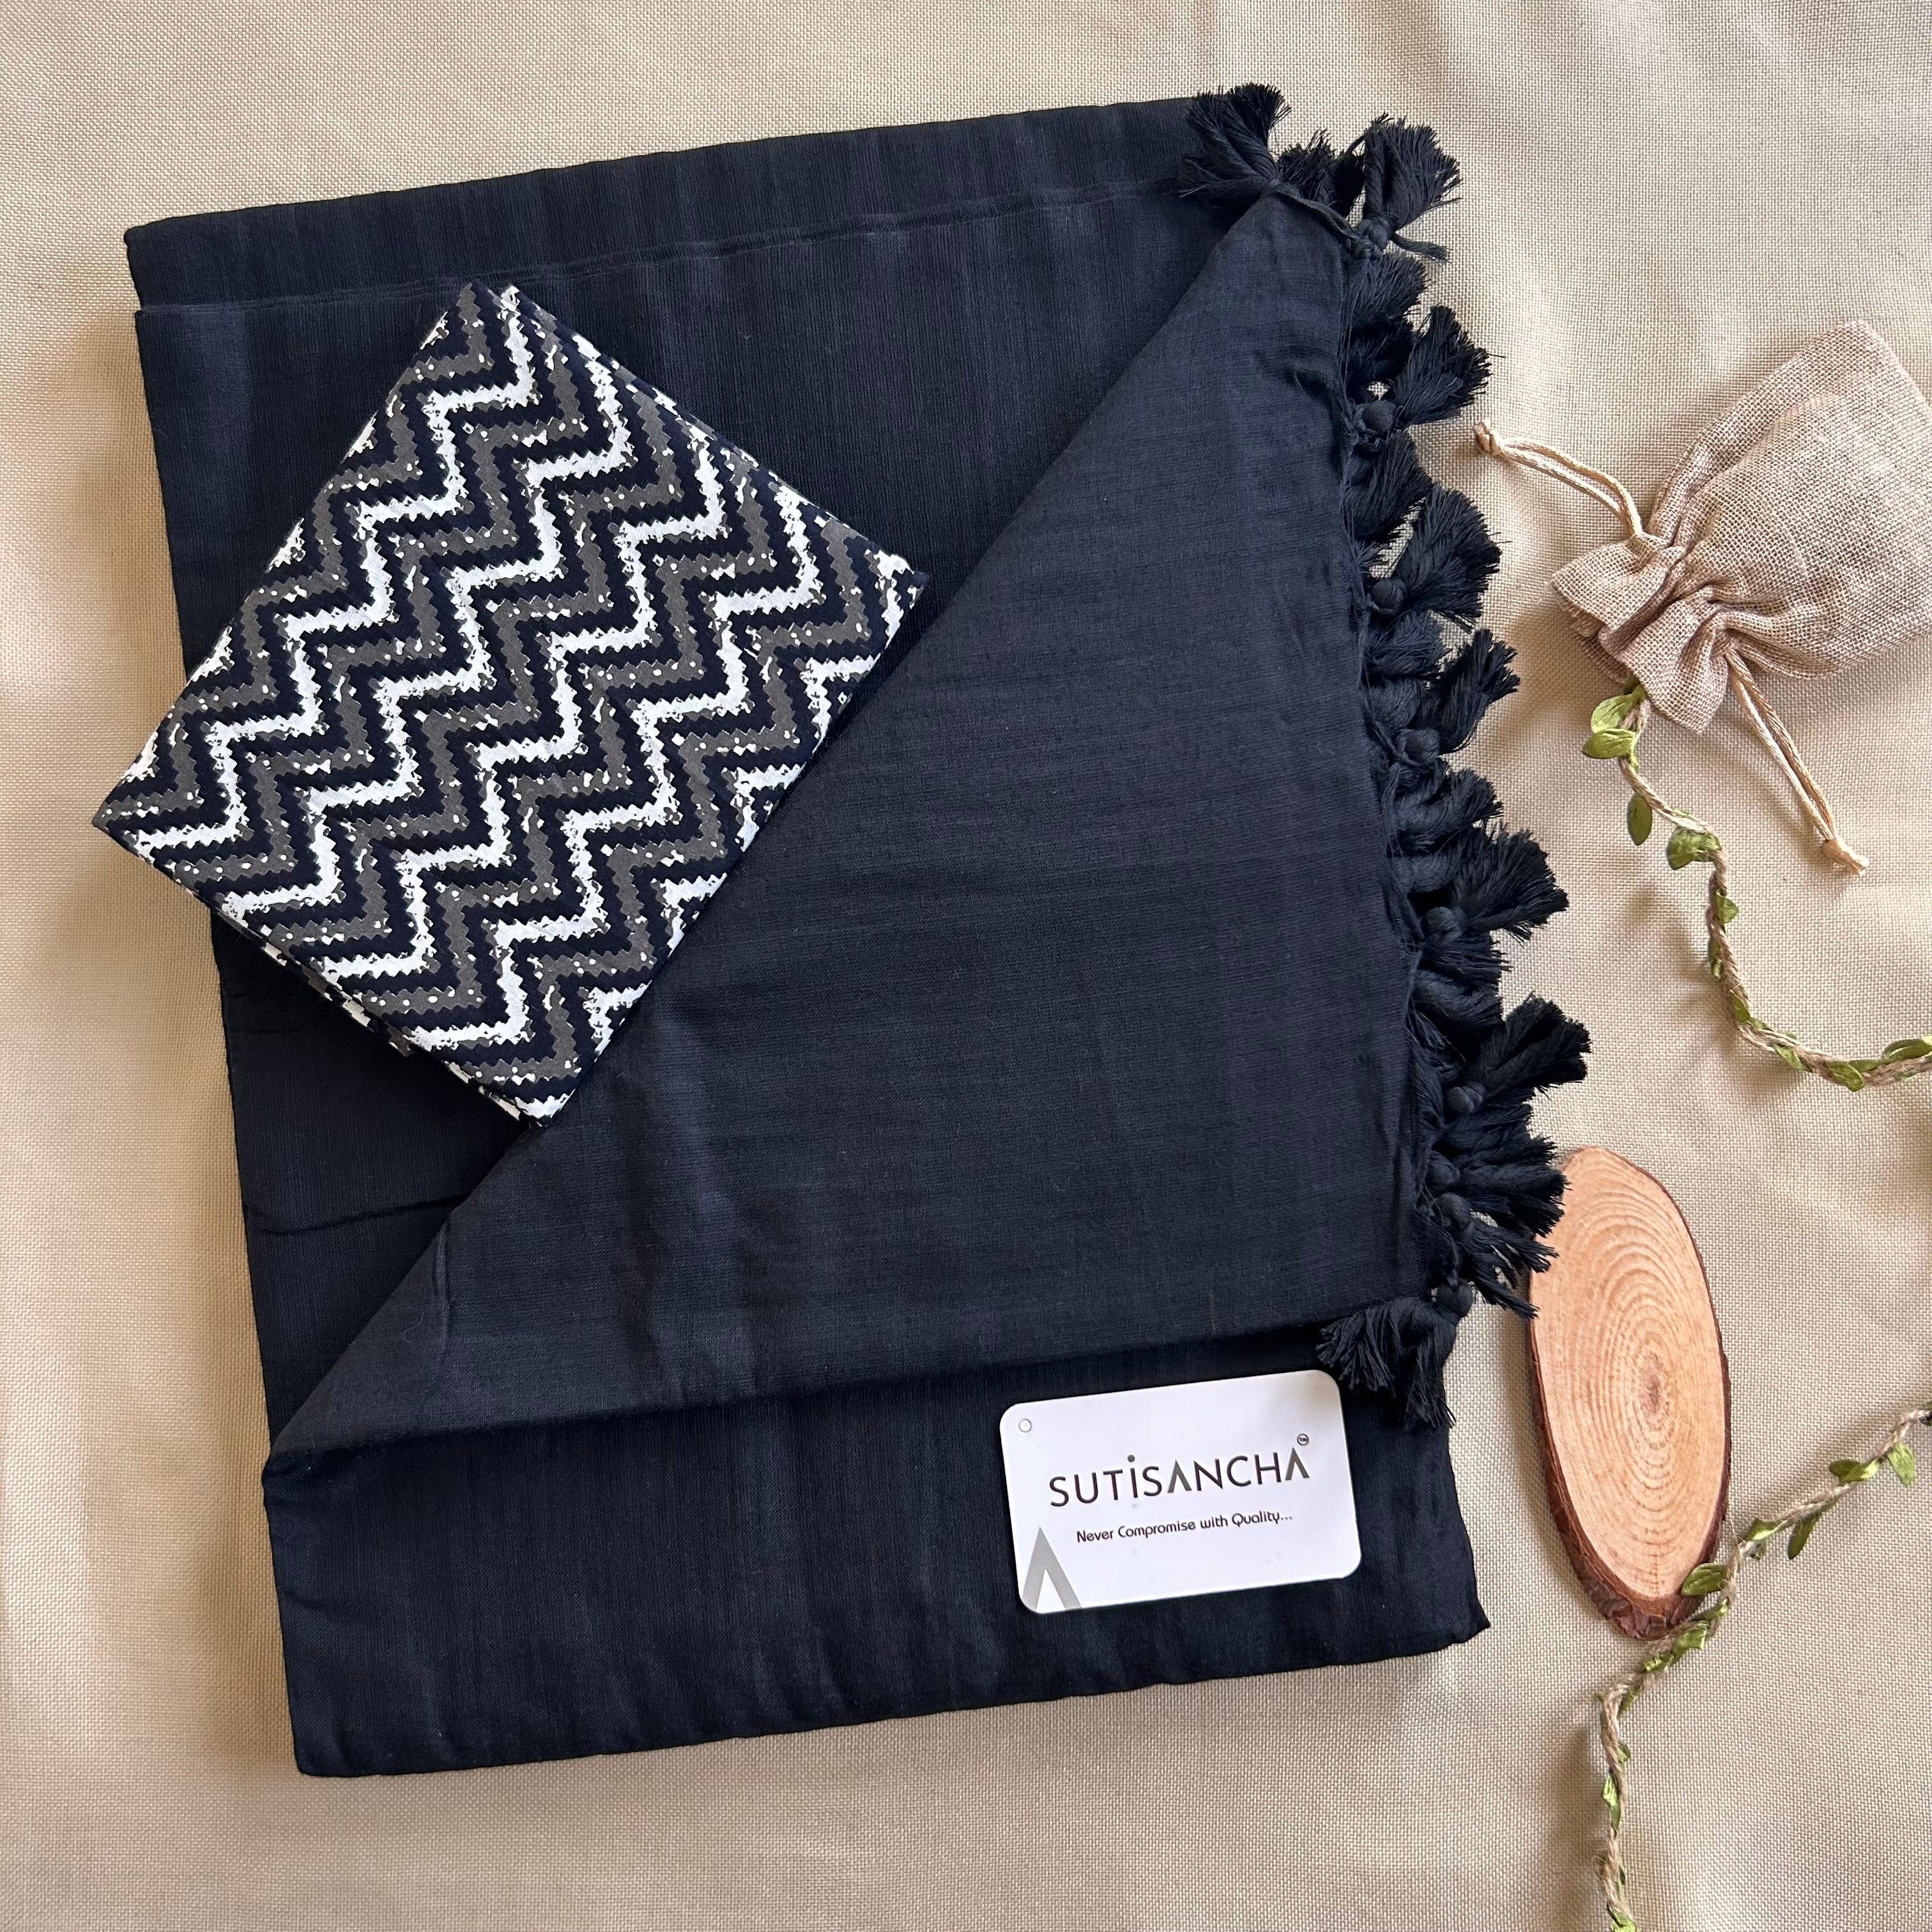 Sutisancha Black Handloom Cotton  Saree & Designer Blouse